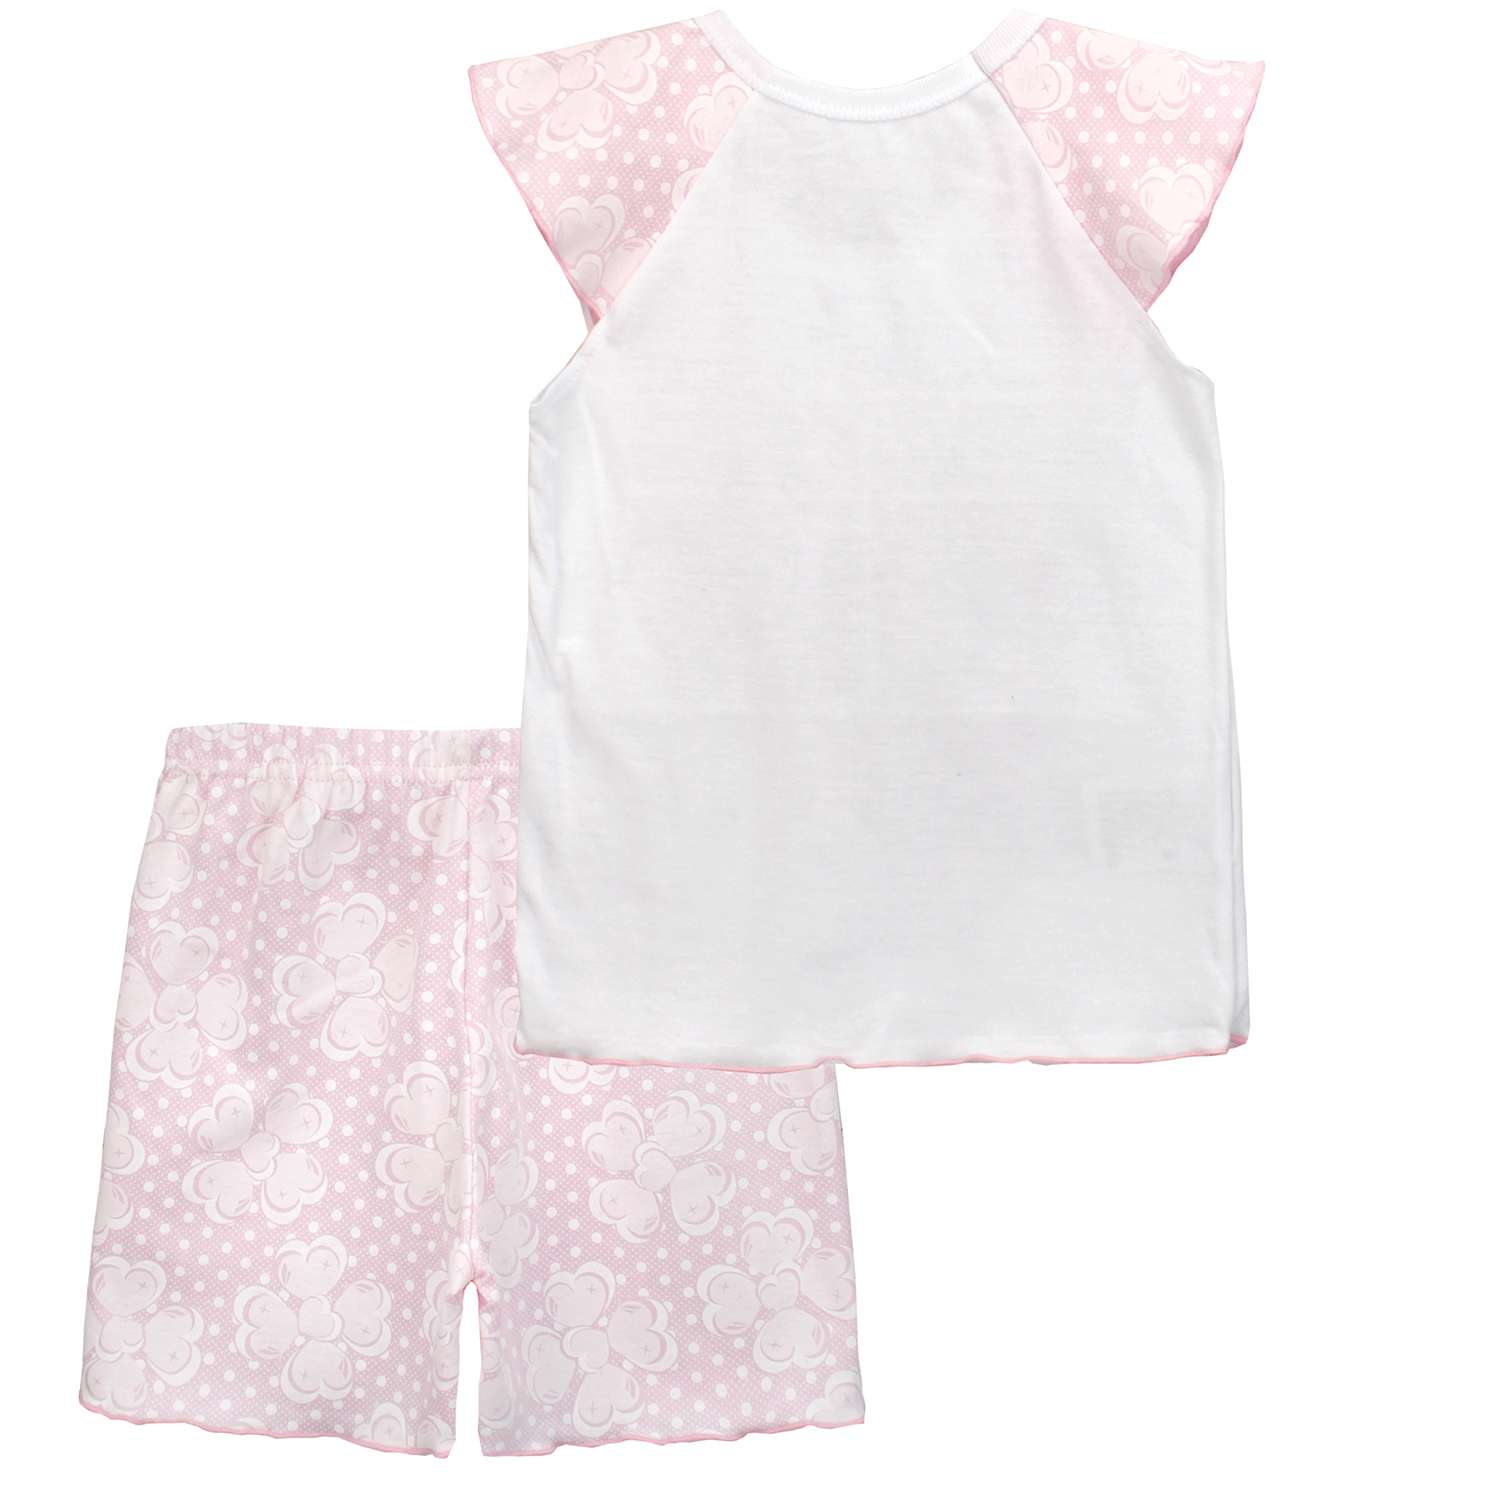 Пижама Babycollection 00-00025796белый,бледно-розовый - фото 2